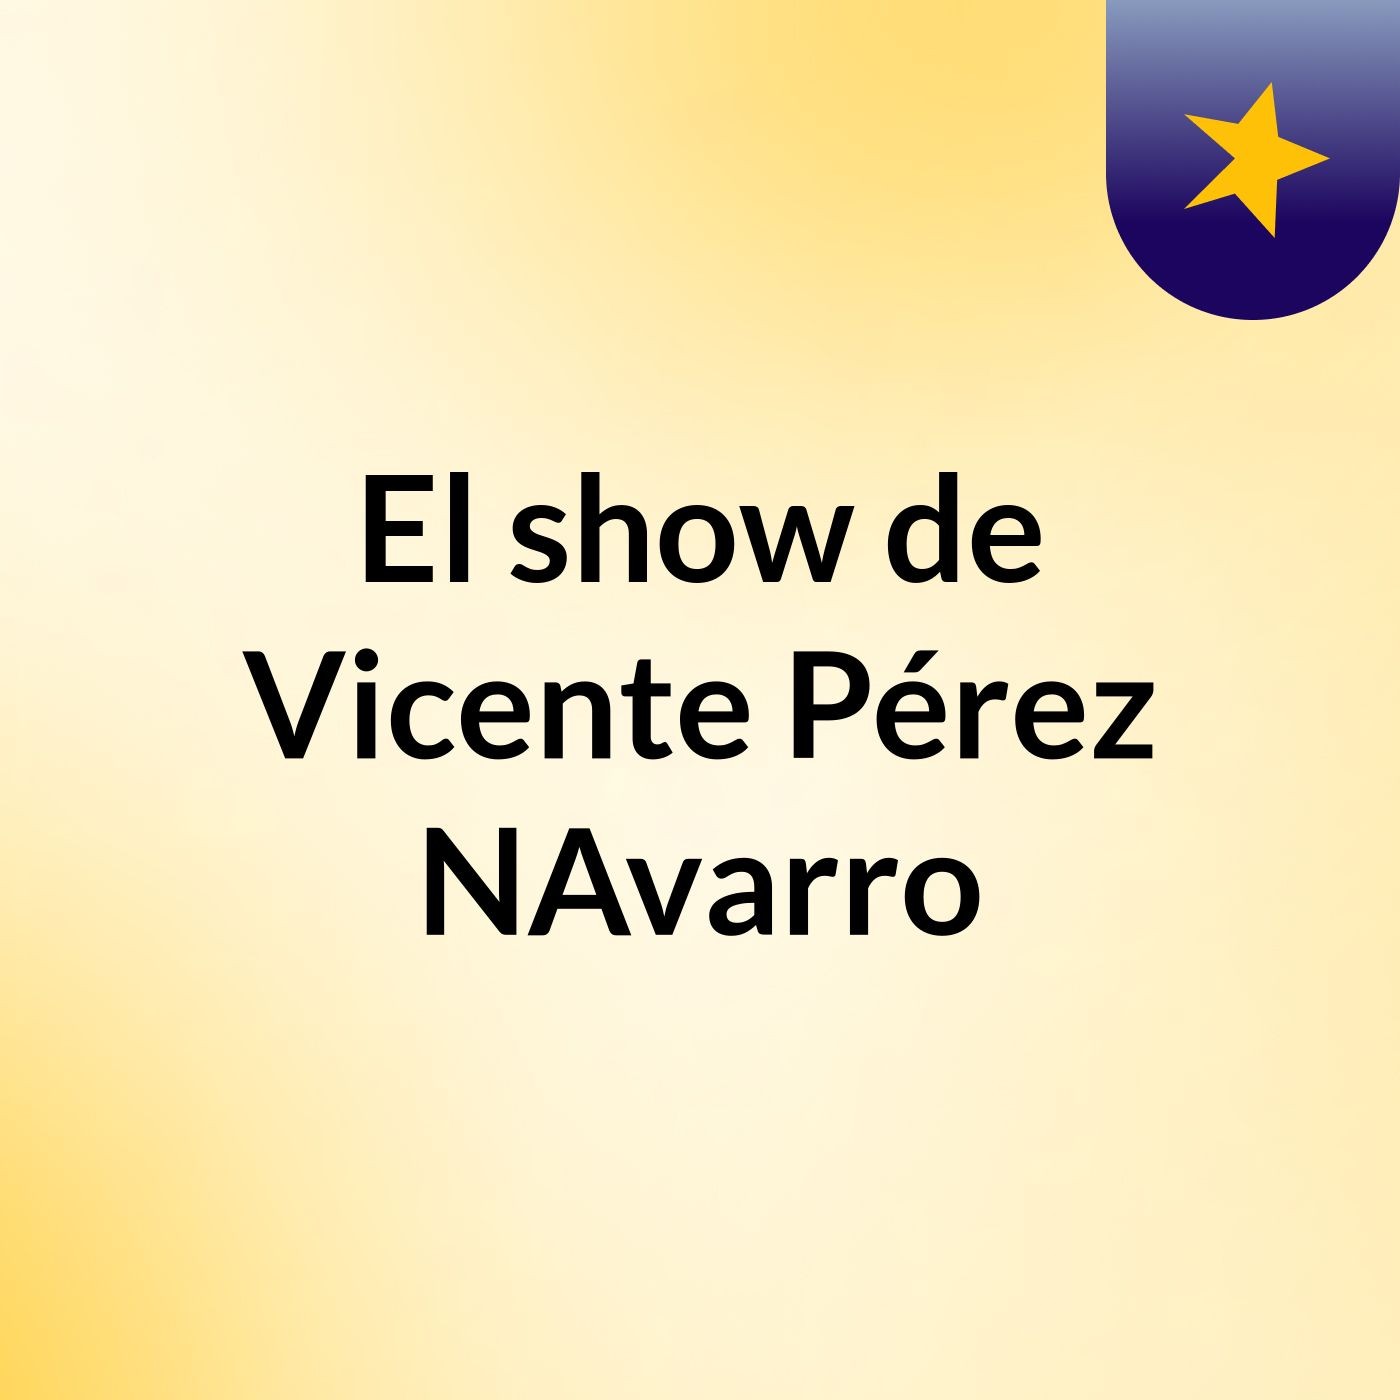 El show de Vicente Pérez NAvarro